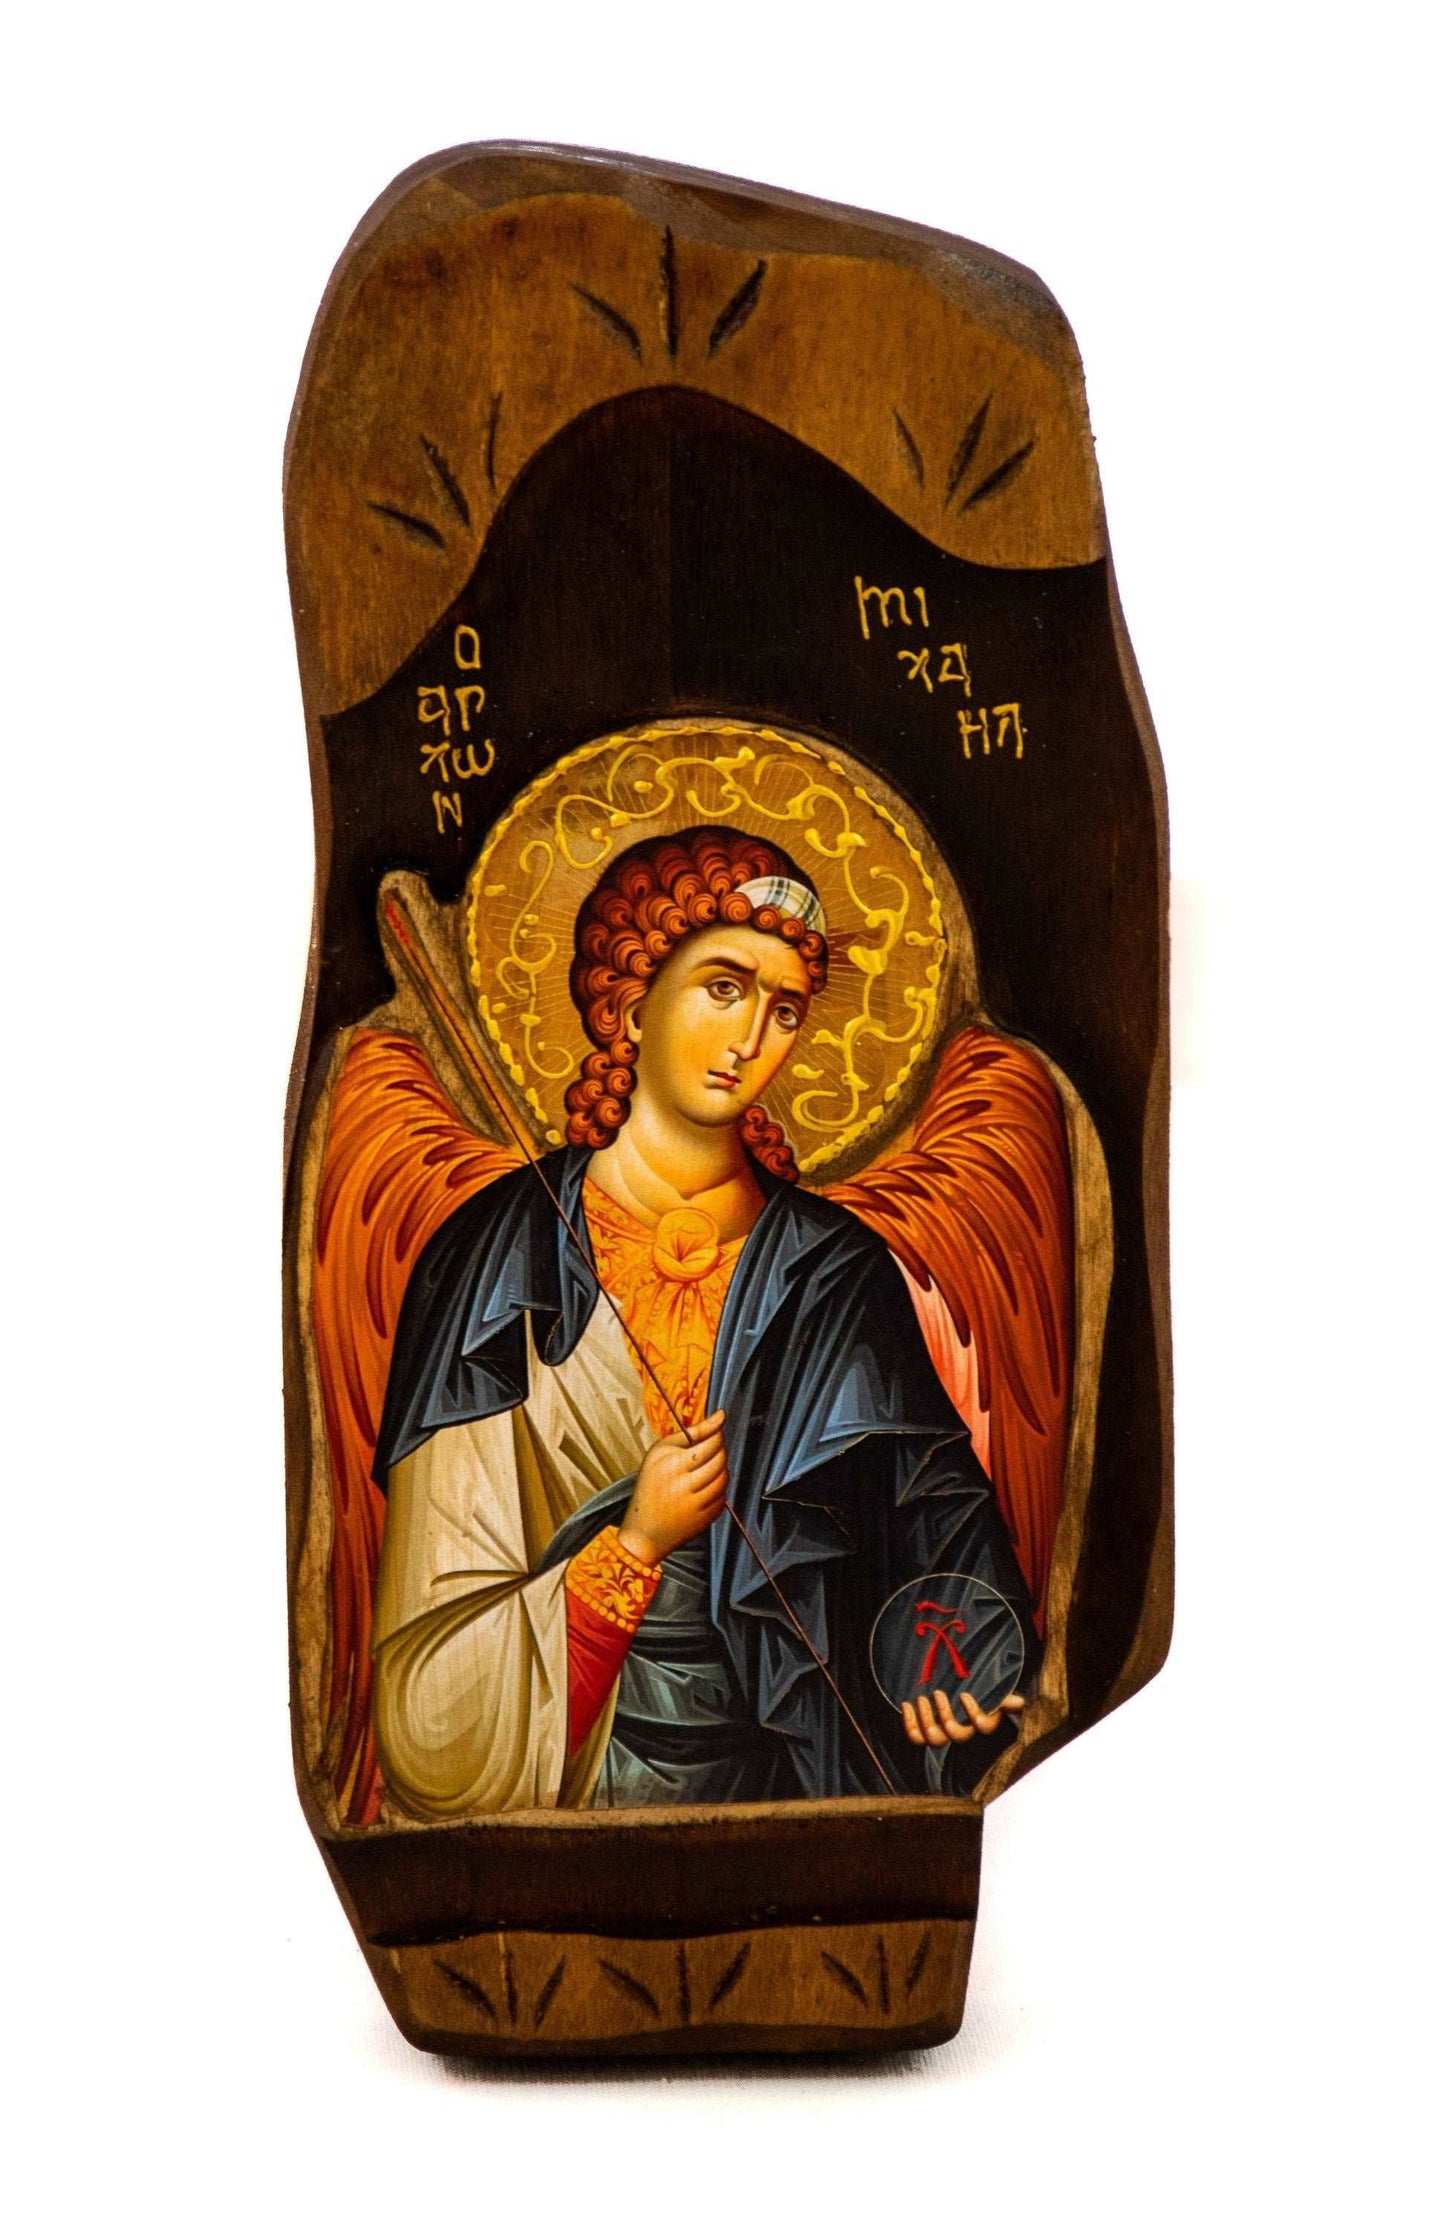 Archangel Michael icon, Handmade Greek Orthodox icon of St Michael, Byzantine art wall hanging on wood plaque, religious decor TheHolyArt